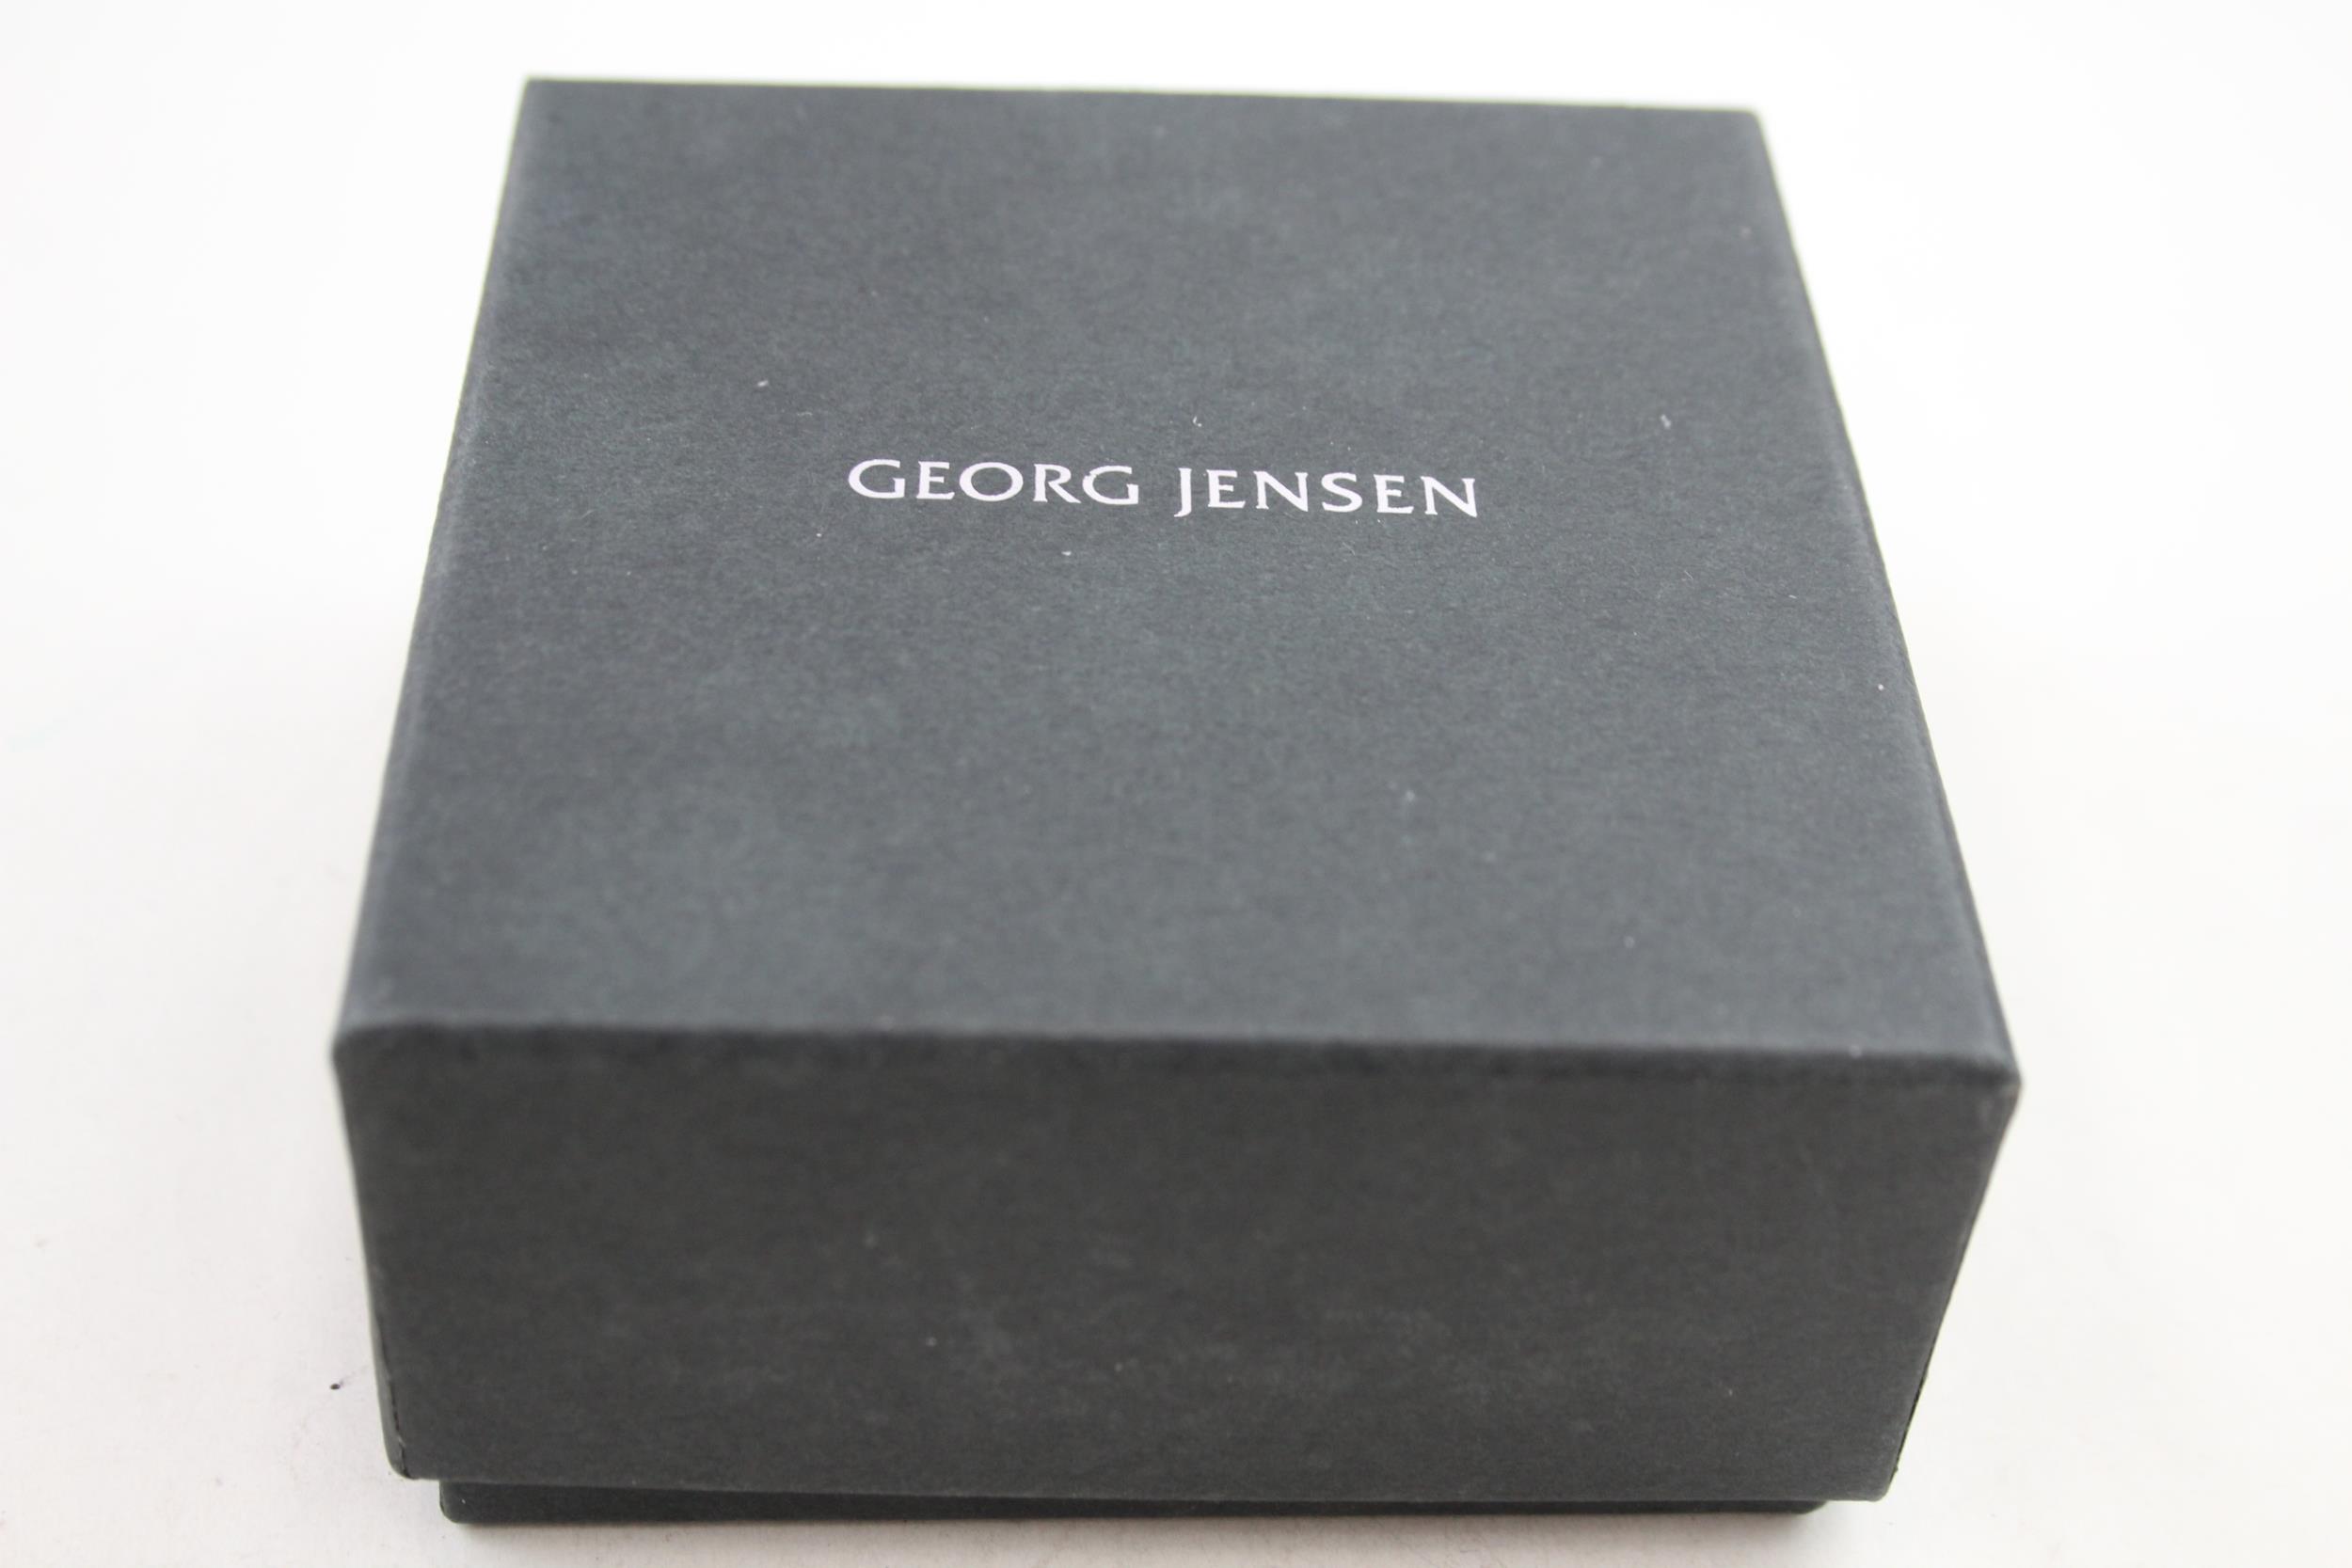 Georg Jensen sterling silver Offspring pendant necklace (6g) - Image 5 of 5